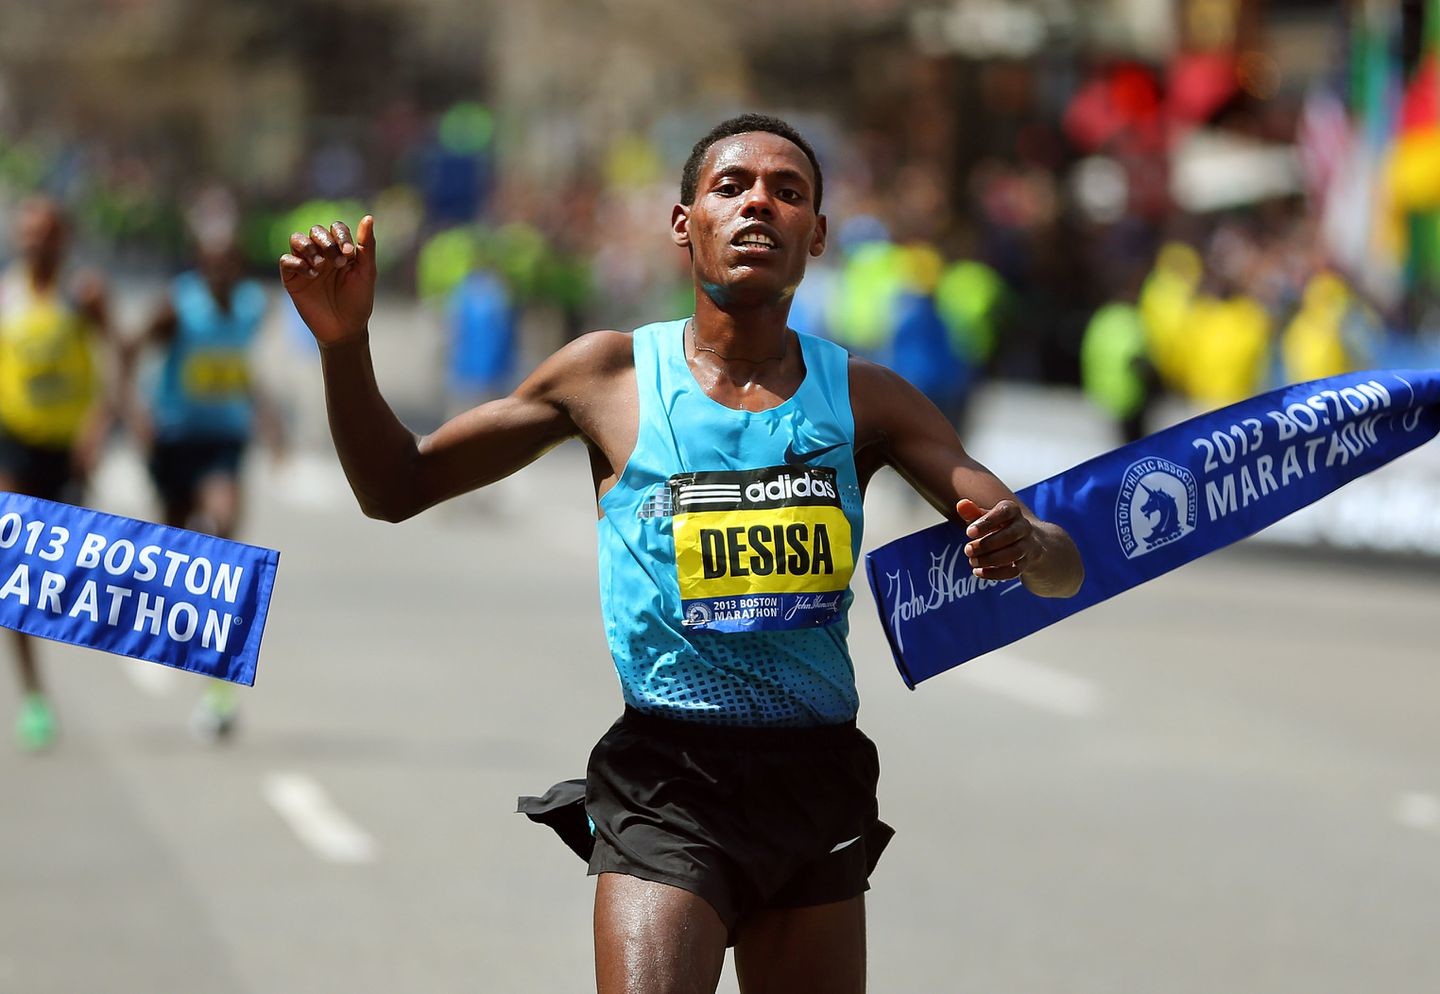 Two-time Boston Marathon Winner & Reigning World Champion Lelisa Desisa will return to Boston Marathon